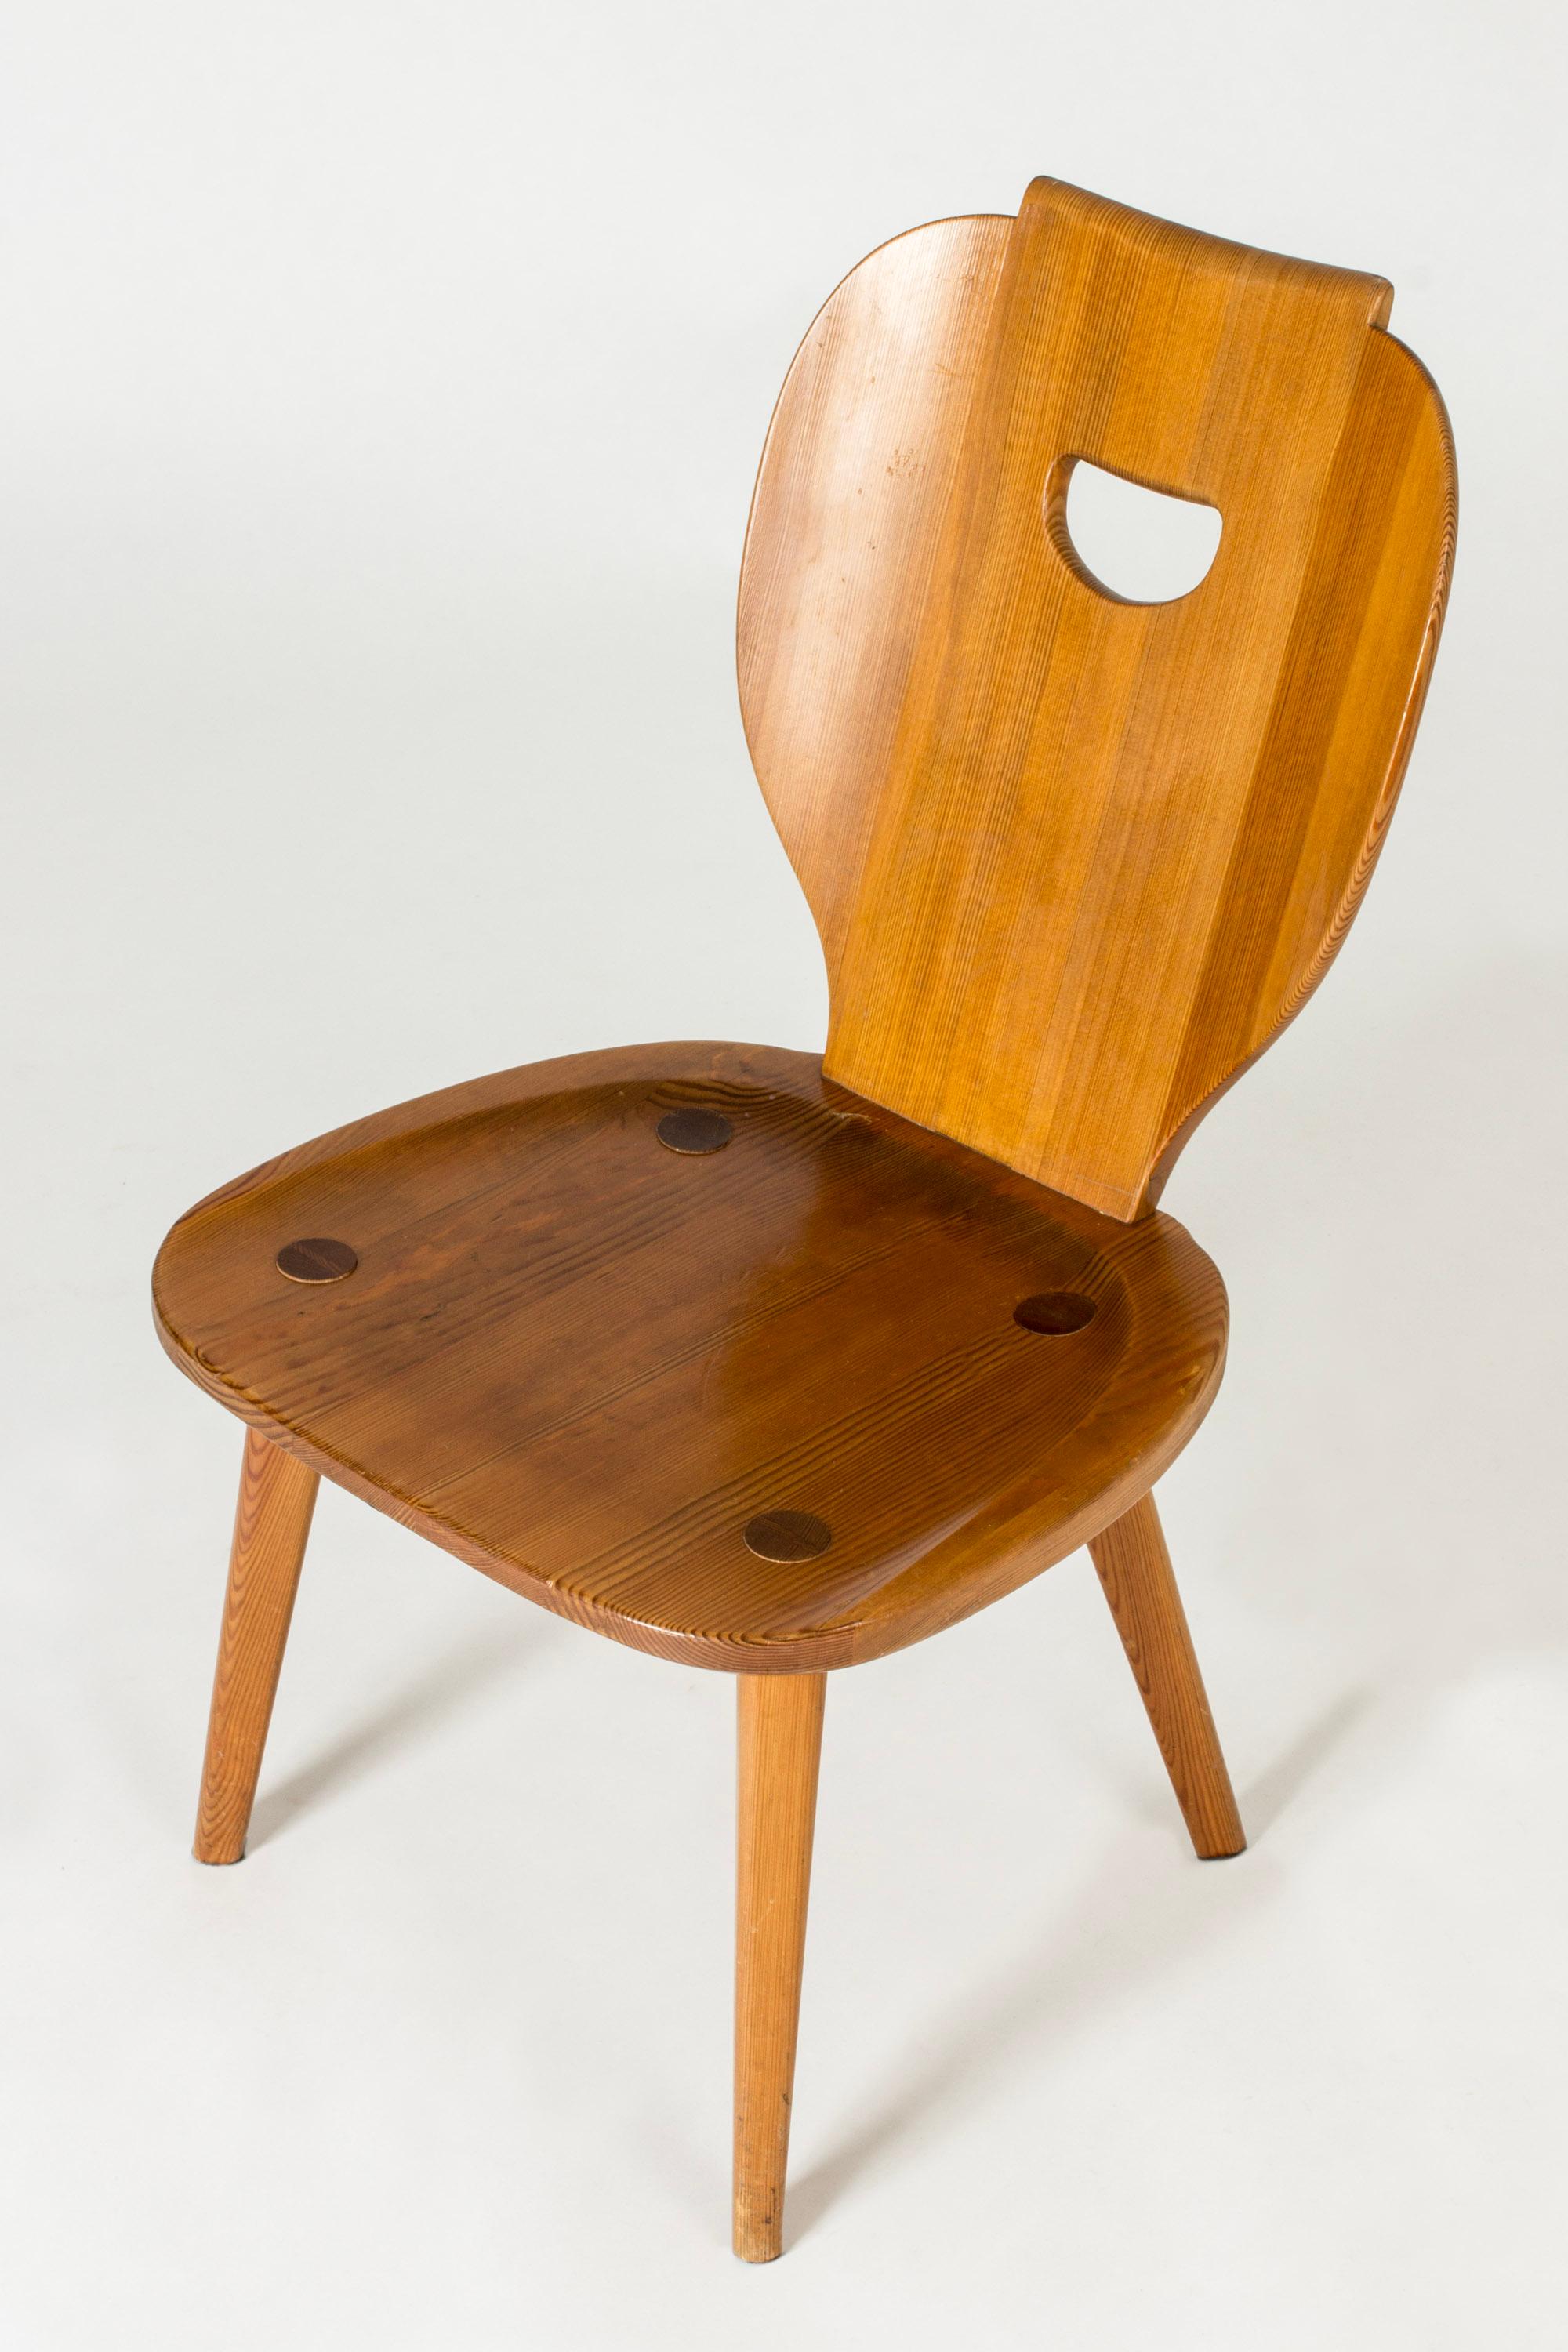 Midcentury Modern Pine Side Chair by Carl Malmsten, Svensk Fur, Sweden, 1940s For Sale 4